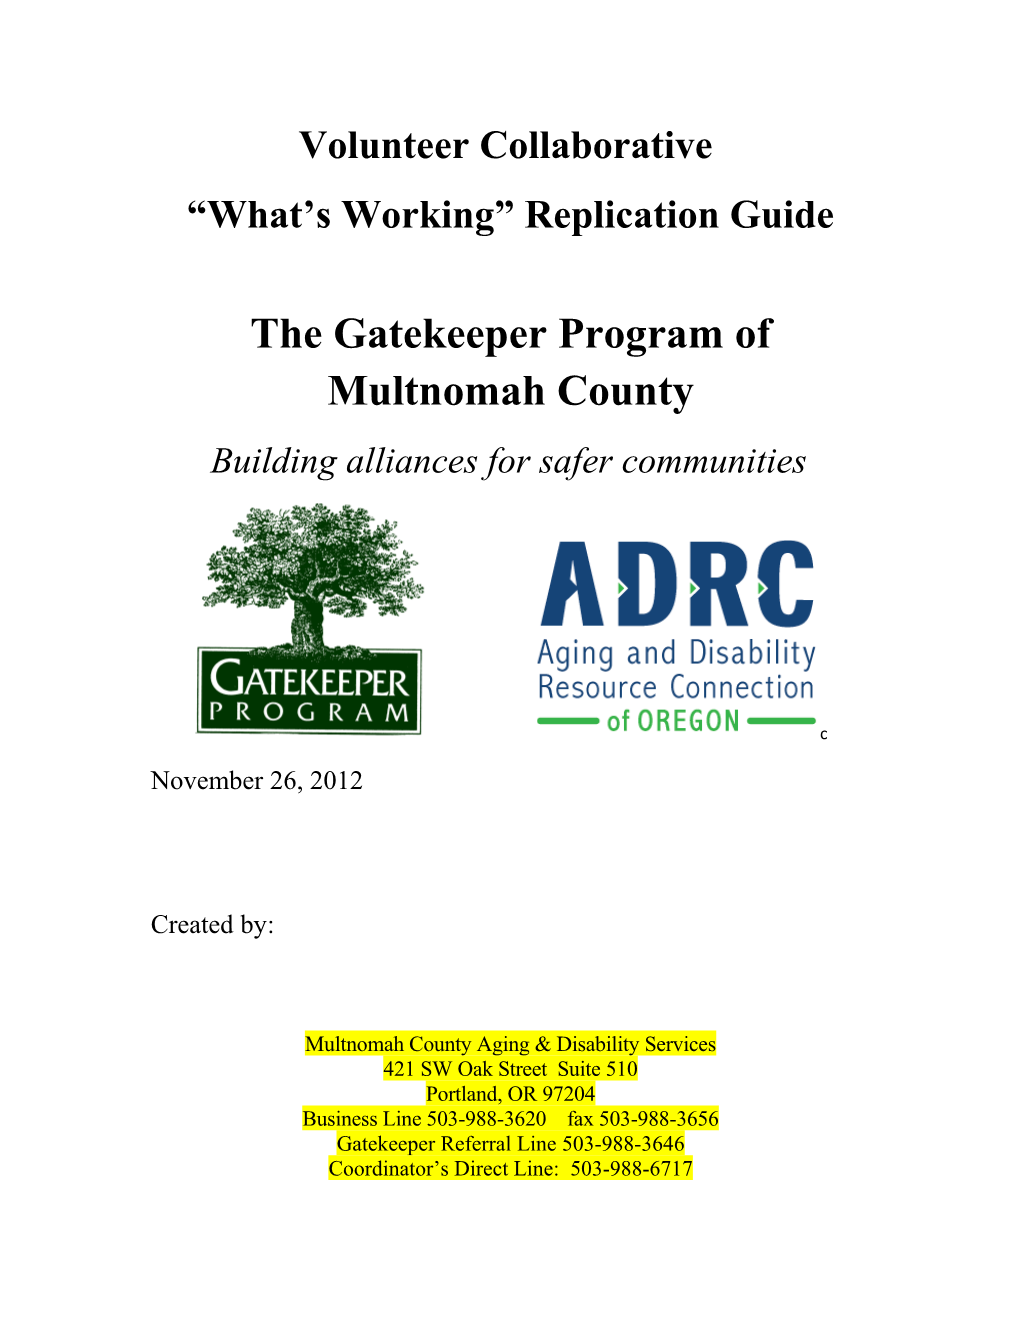 Volunteer Collaborative Replication Guide for the Gatekeeper Program Nov 2012